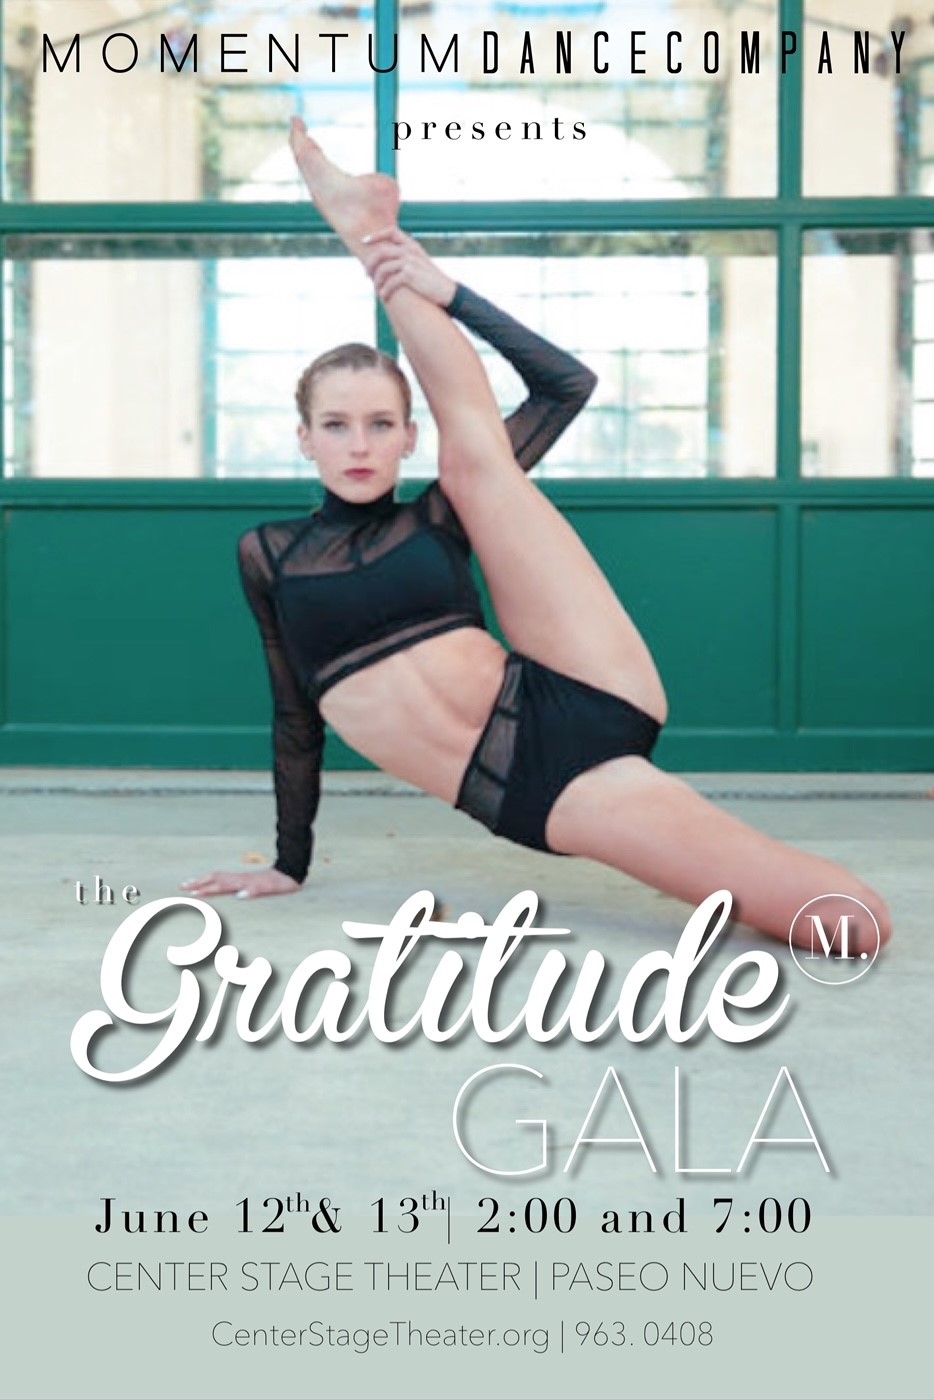 Momentum Dance presents The Gratitude Gala